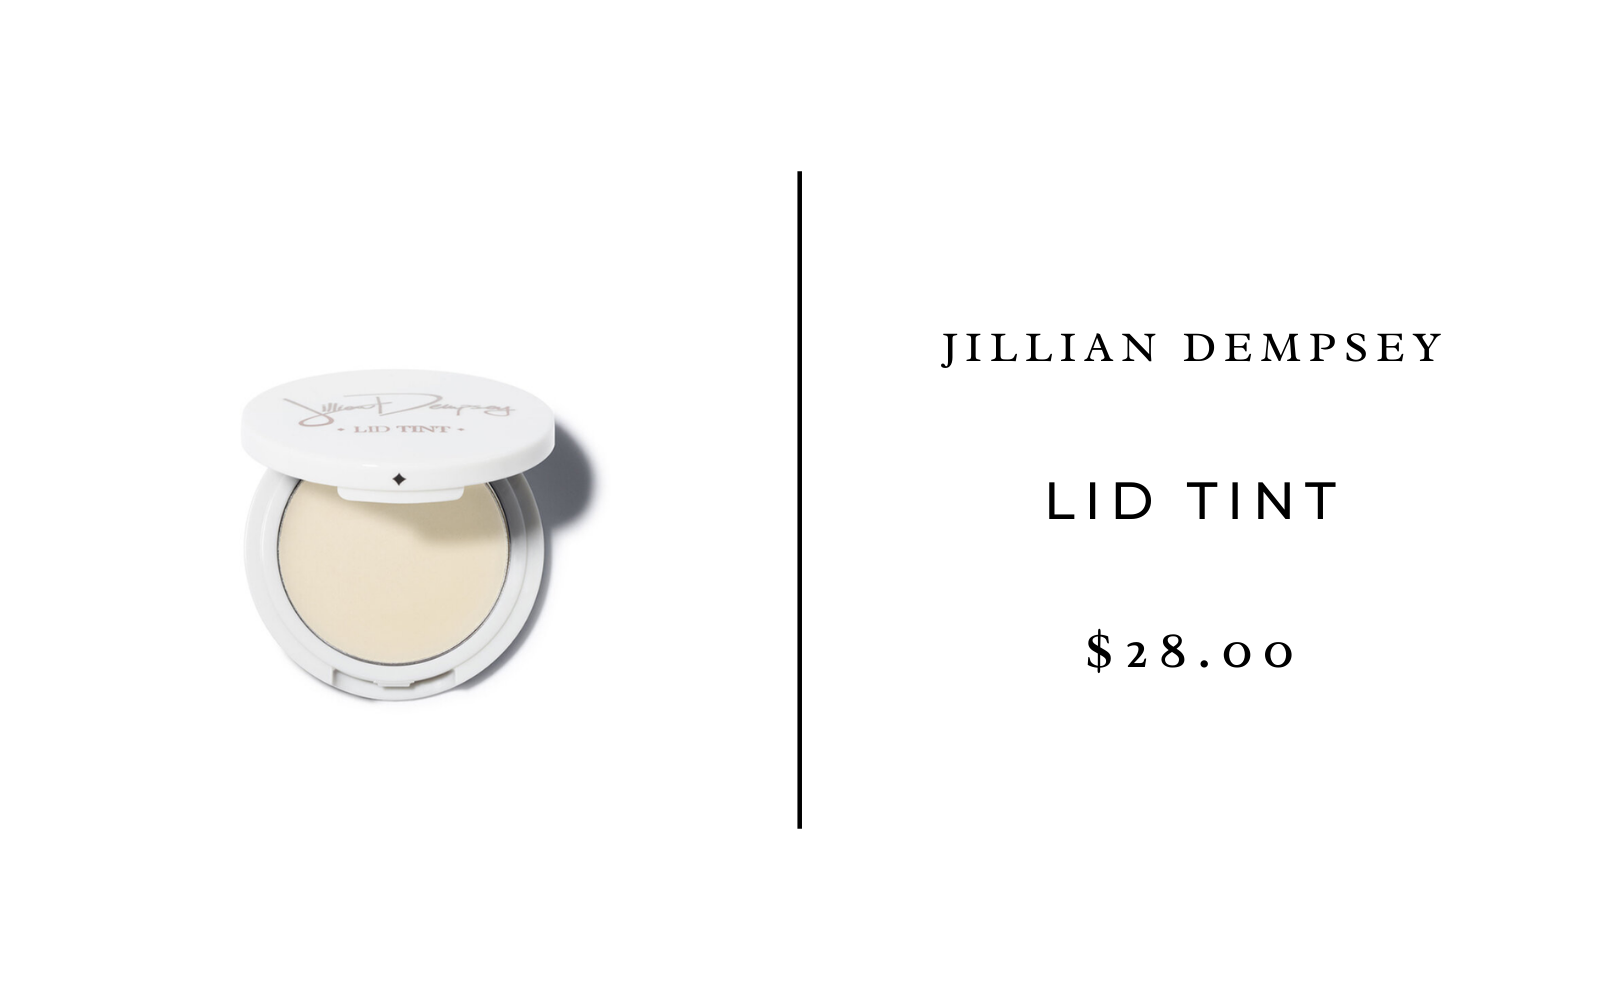 Jillian Dempsey Lid Tint in Dew